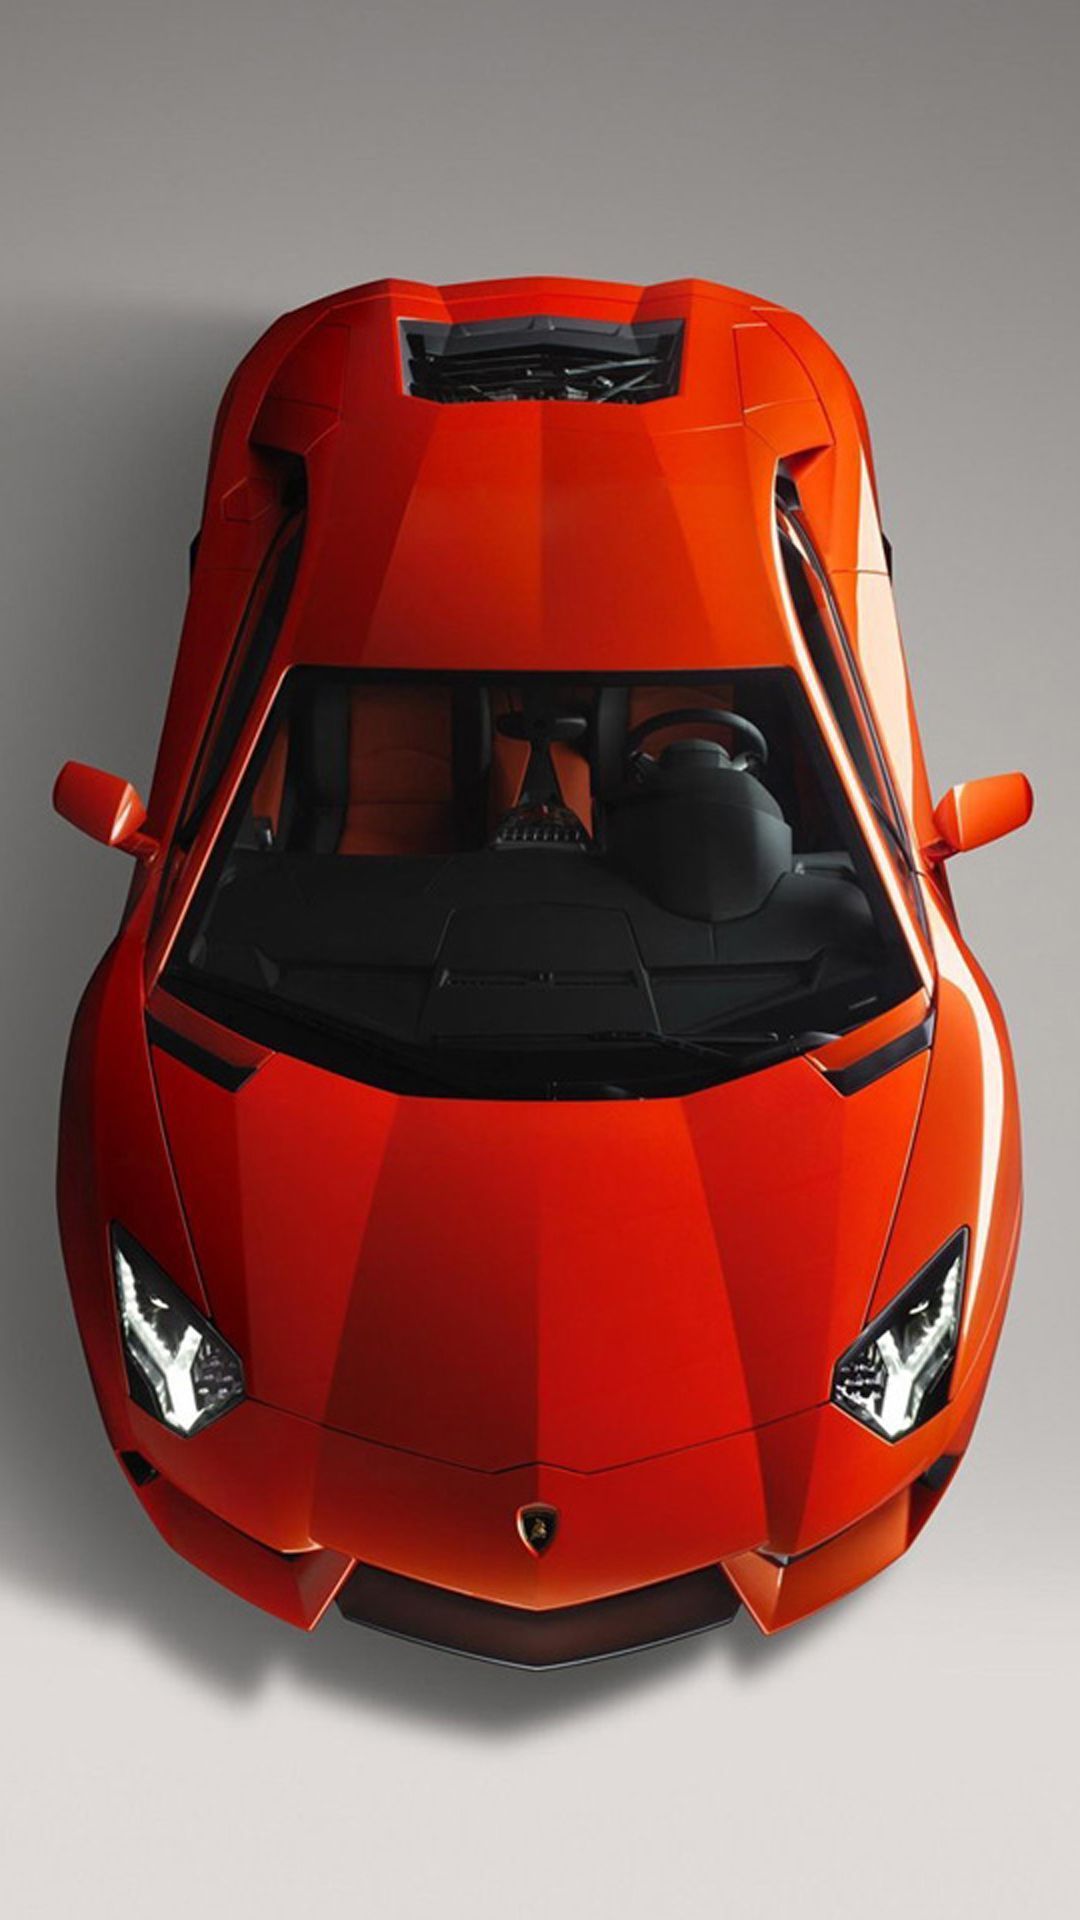 Pretty Red Lamborghini iPhone 6 Wallpaper Download | iPhone ...